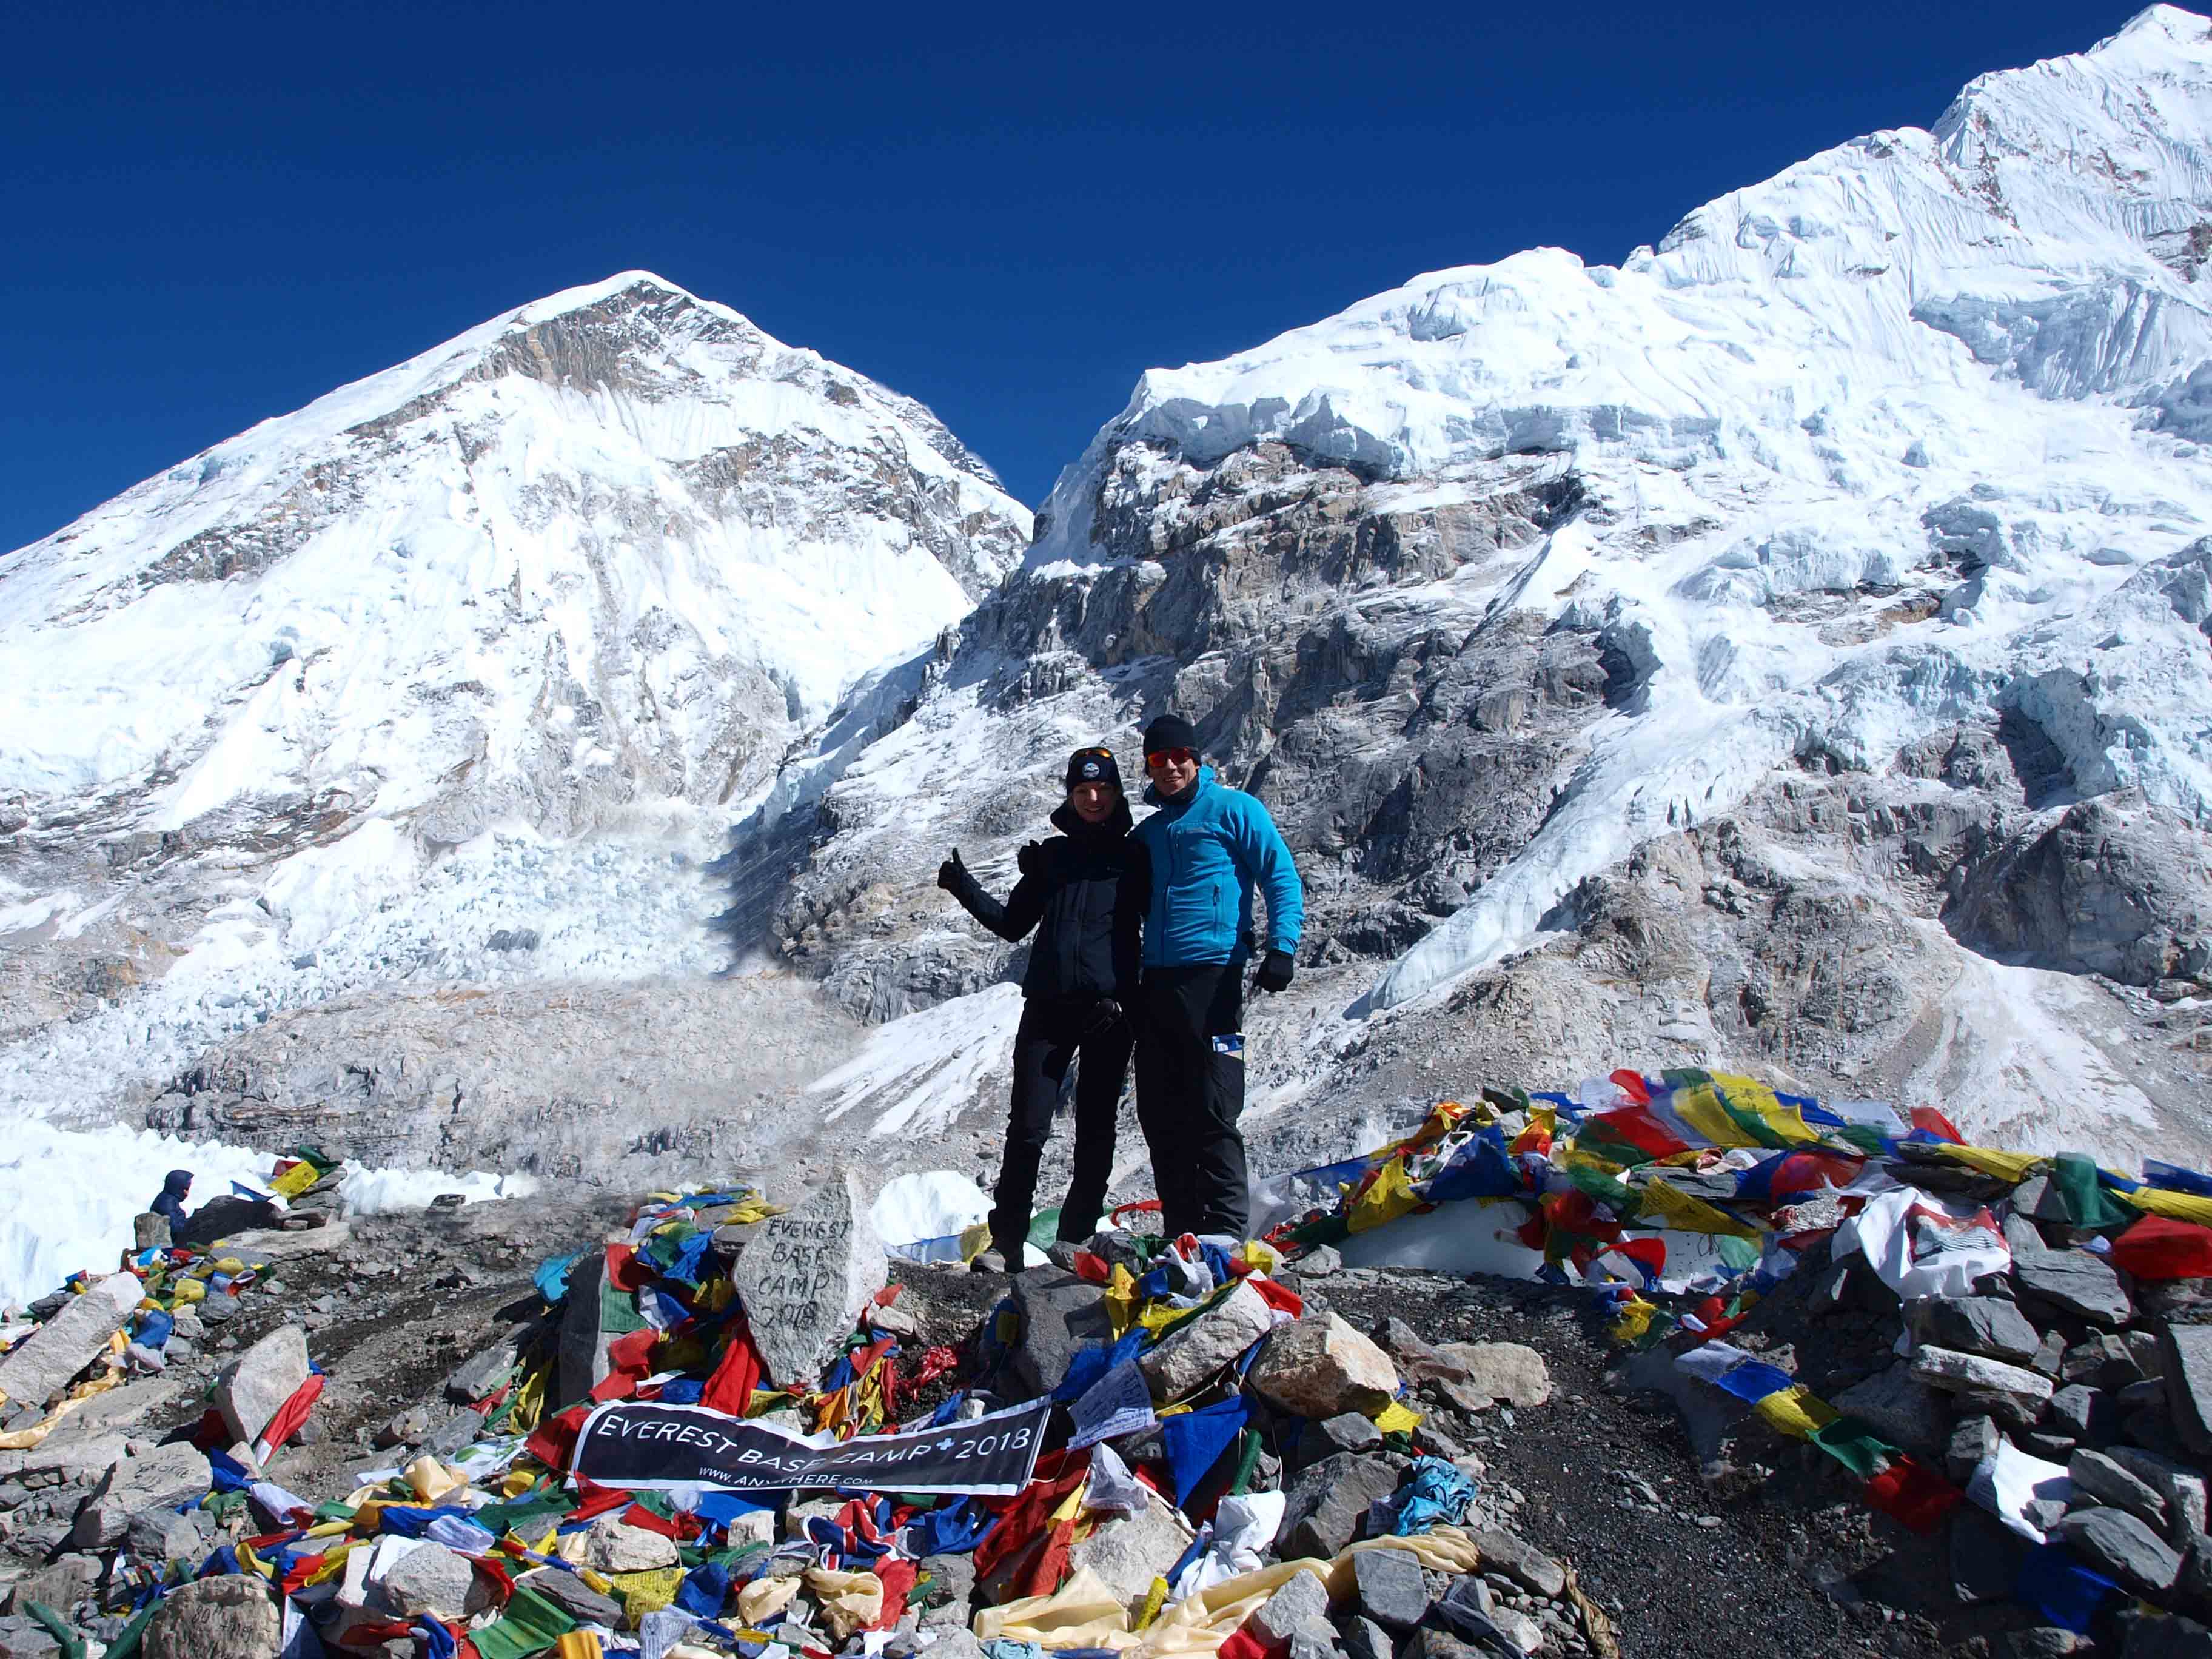 Finally we reached Everest Base Camp October 2018